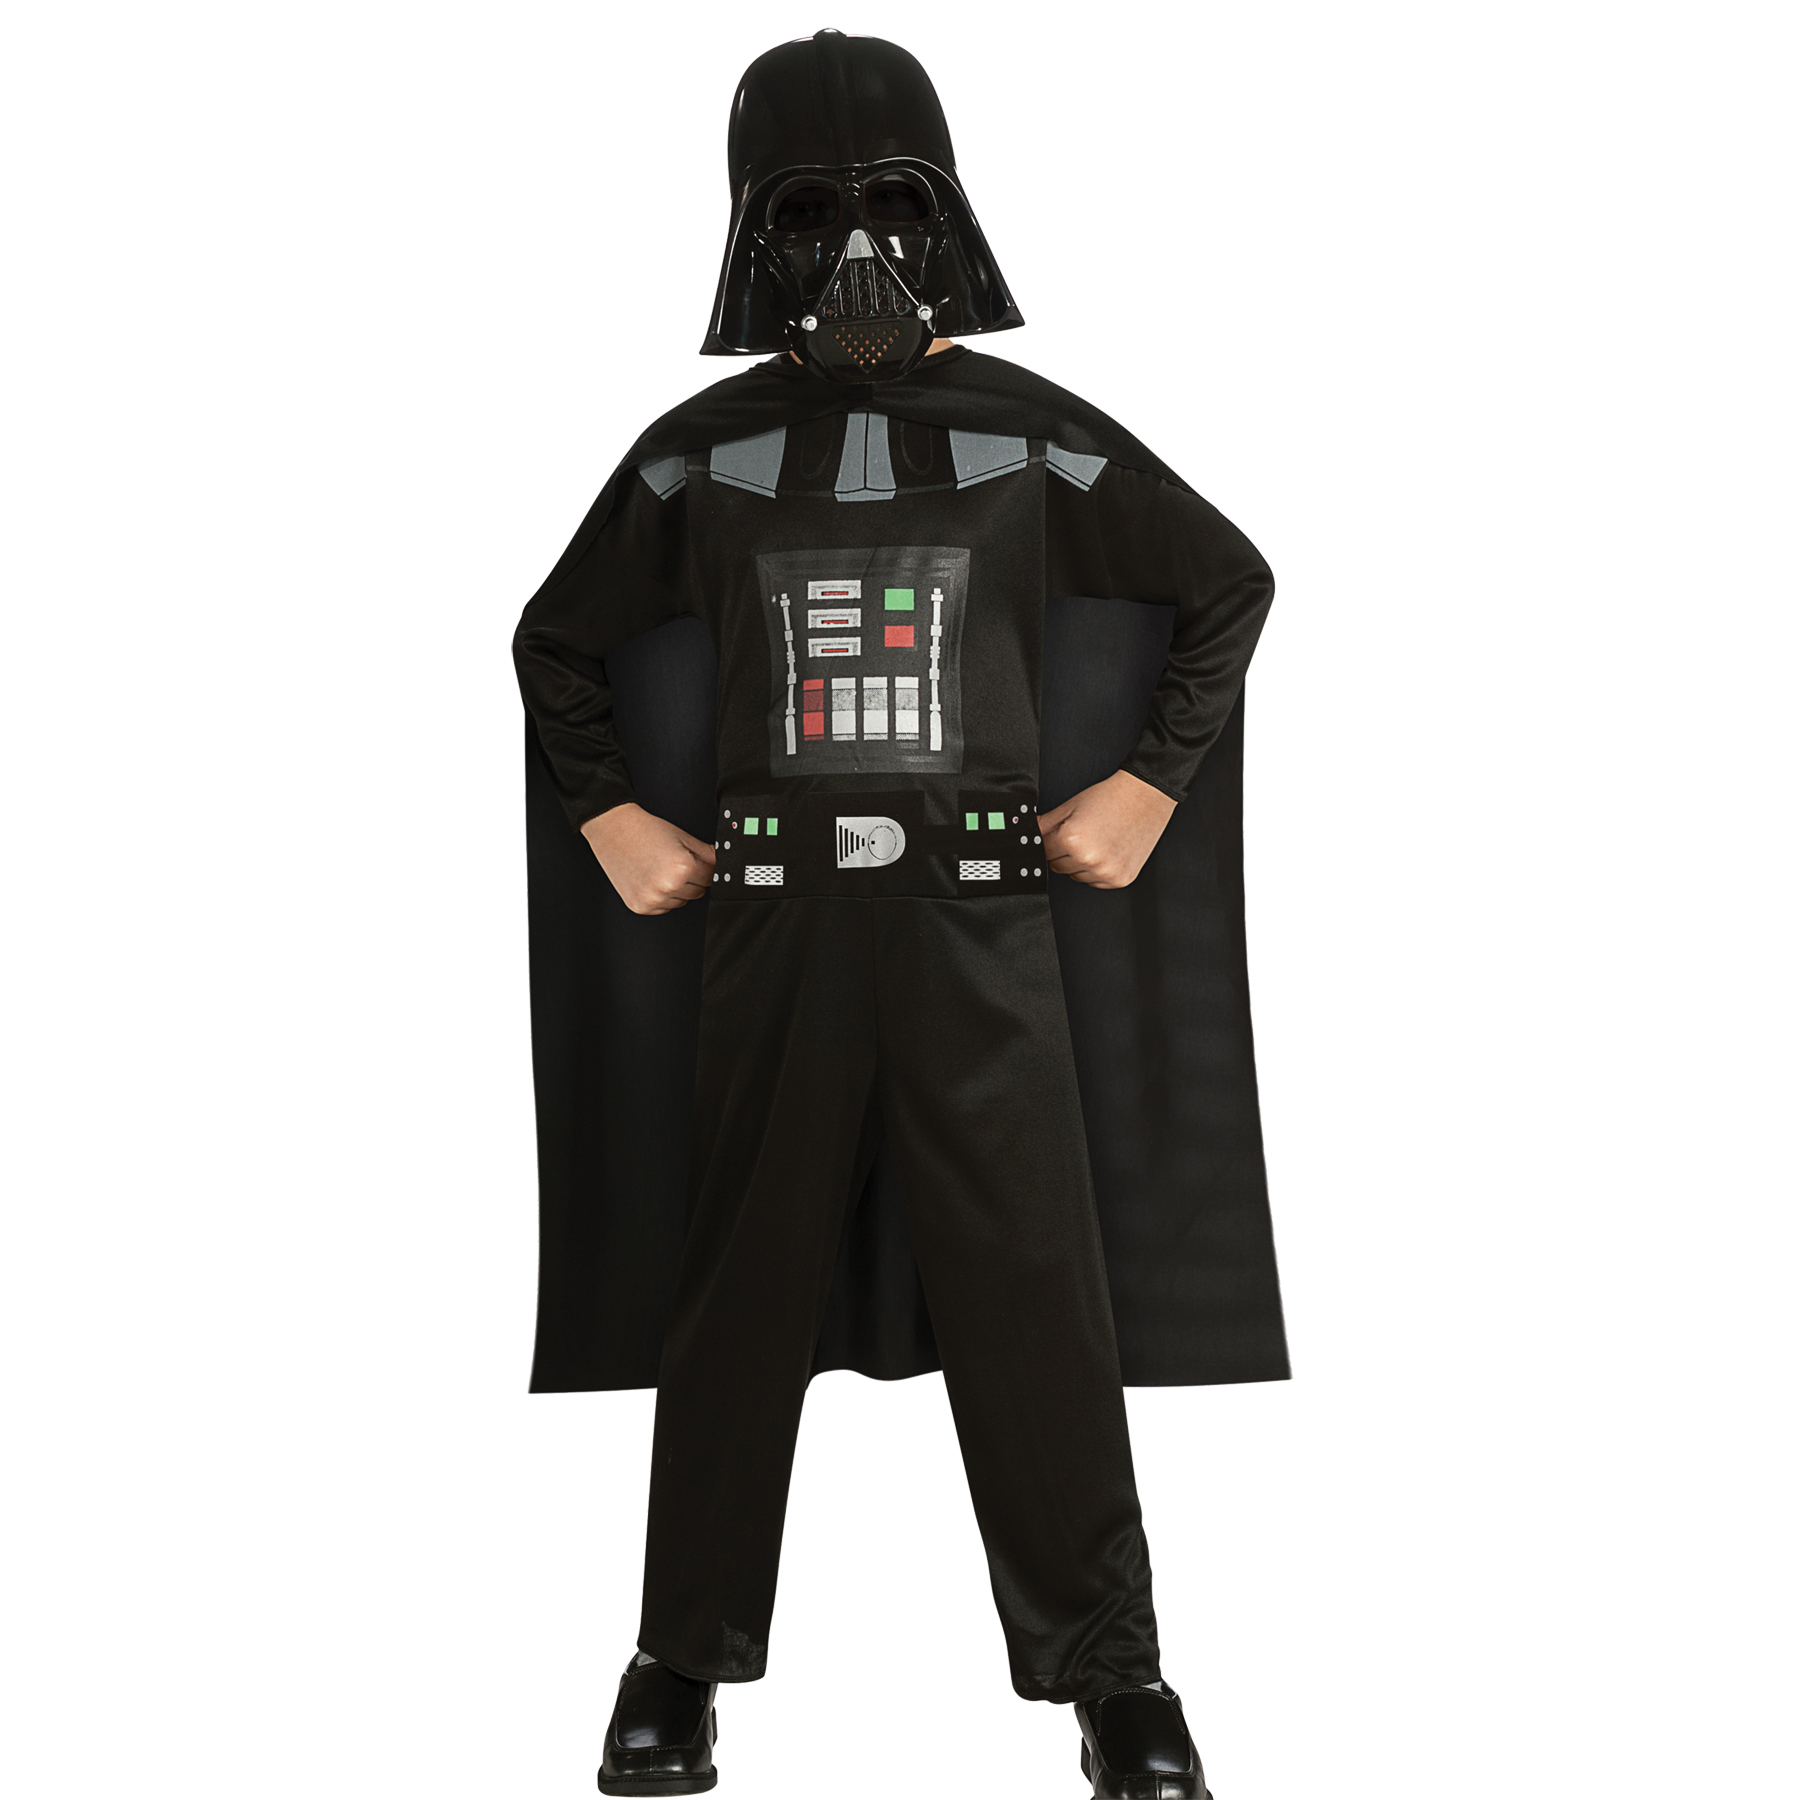 Boy's Star Wars Darth Vader Costume